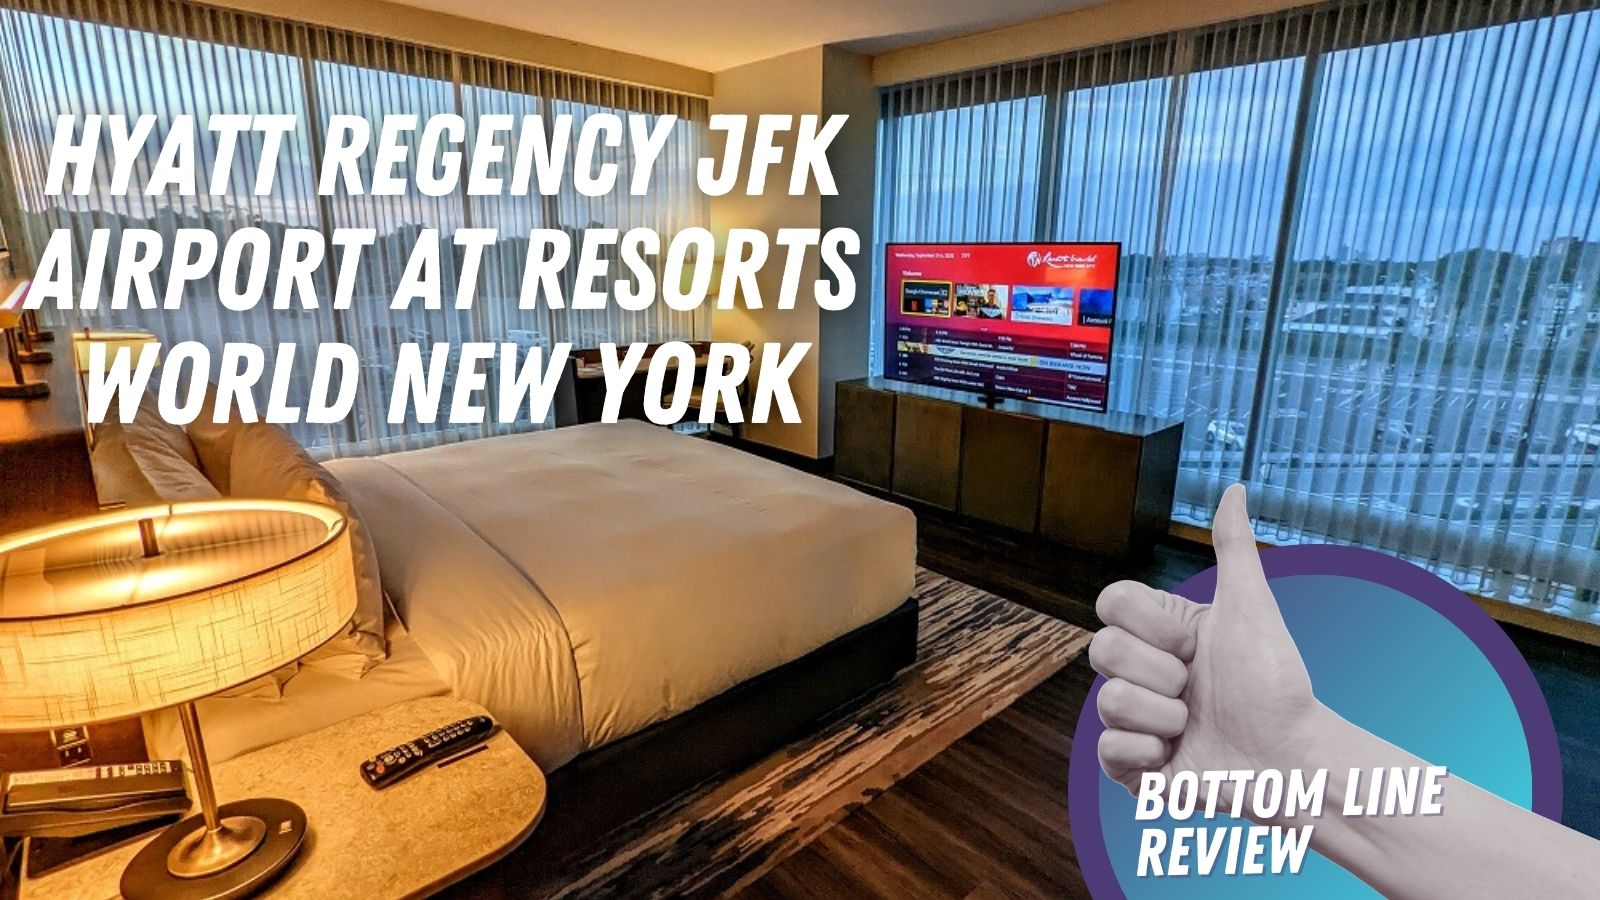 Hotel Review Hyatt Regency JFK Airport At Resorts World New York